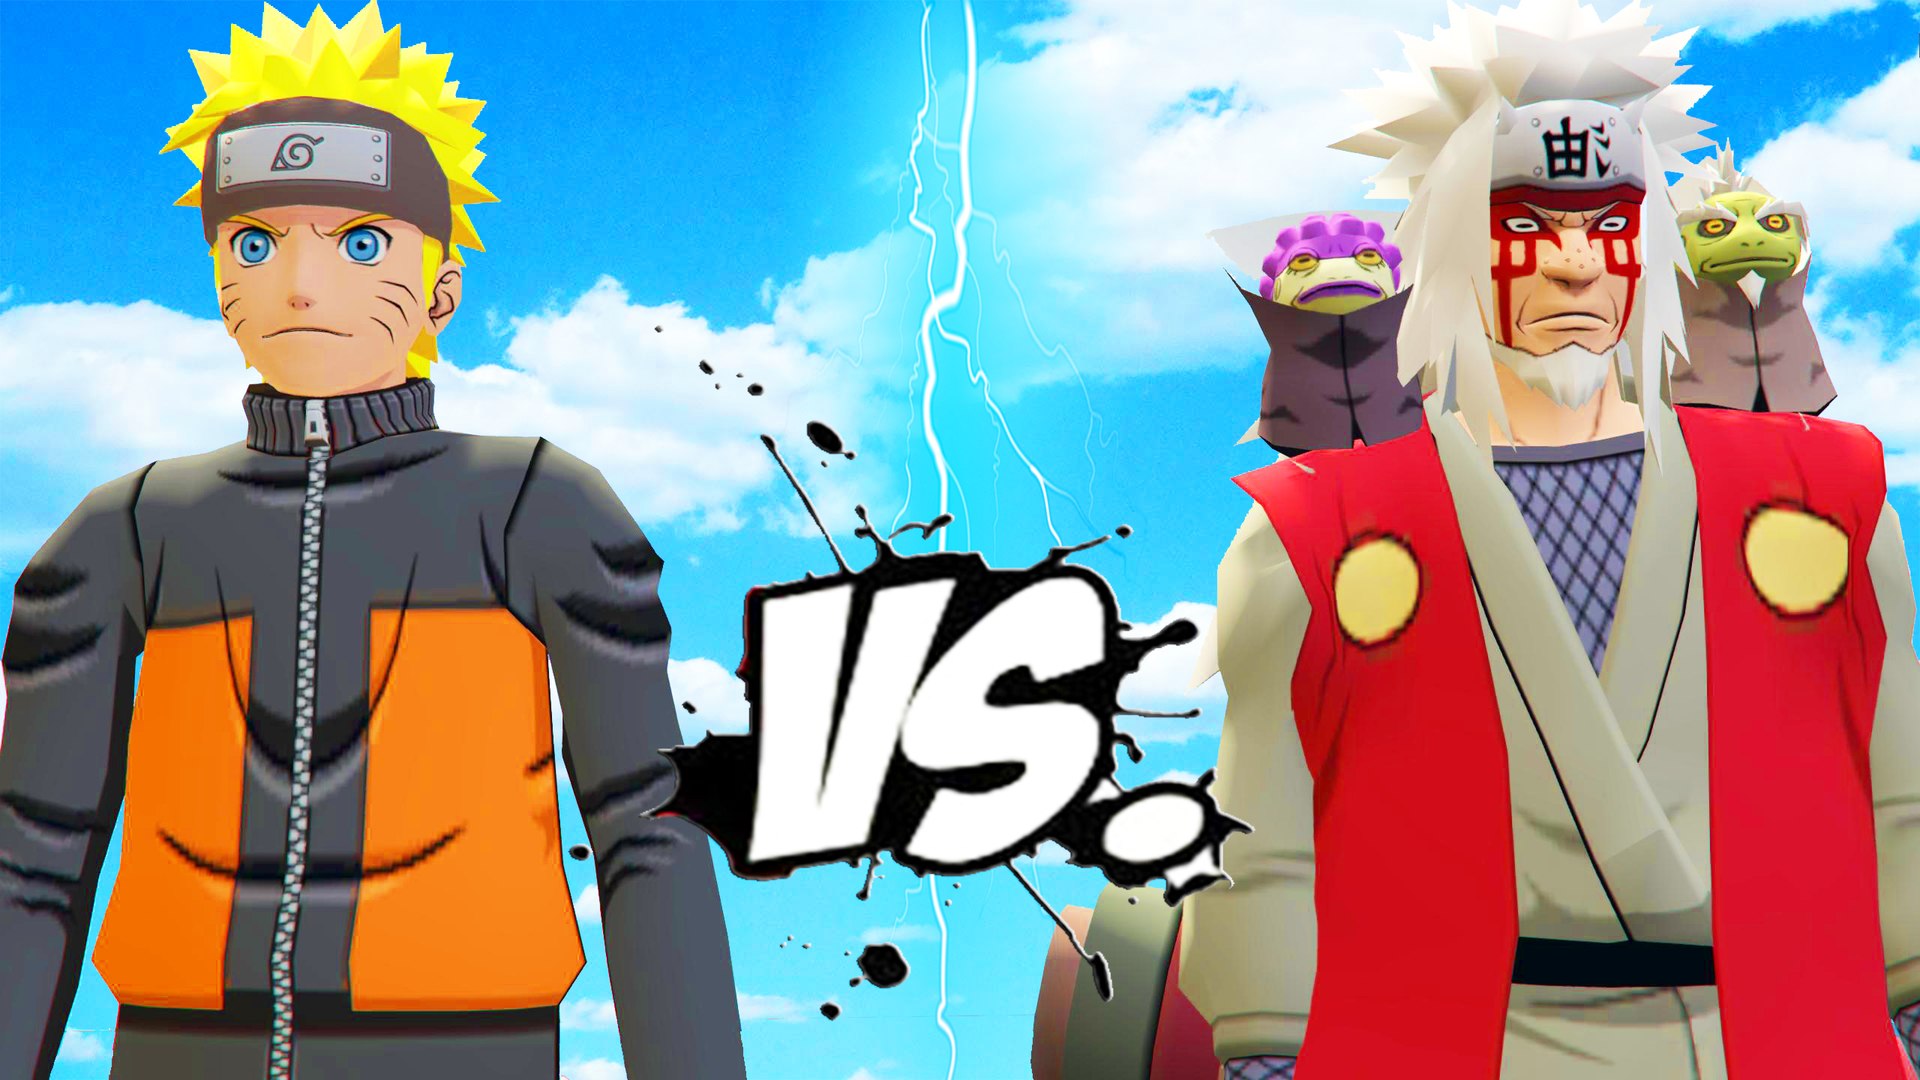 Naruto x Sasuke Batalha Final - Vídeo Dailymotion